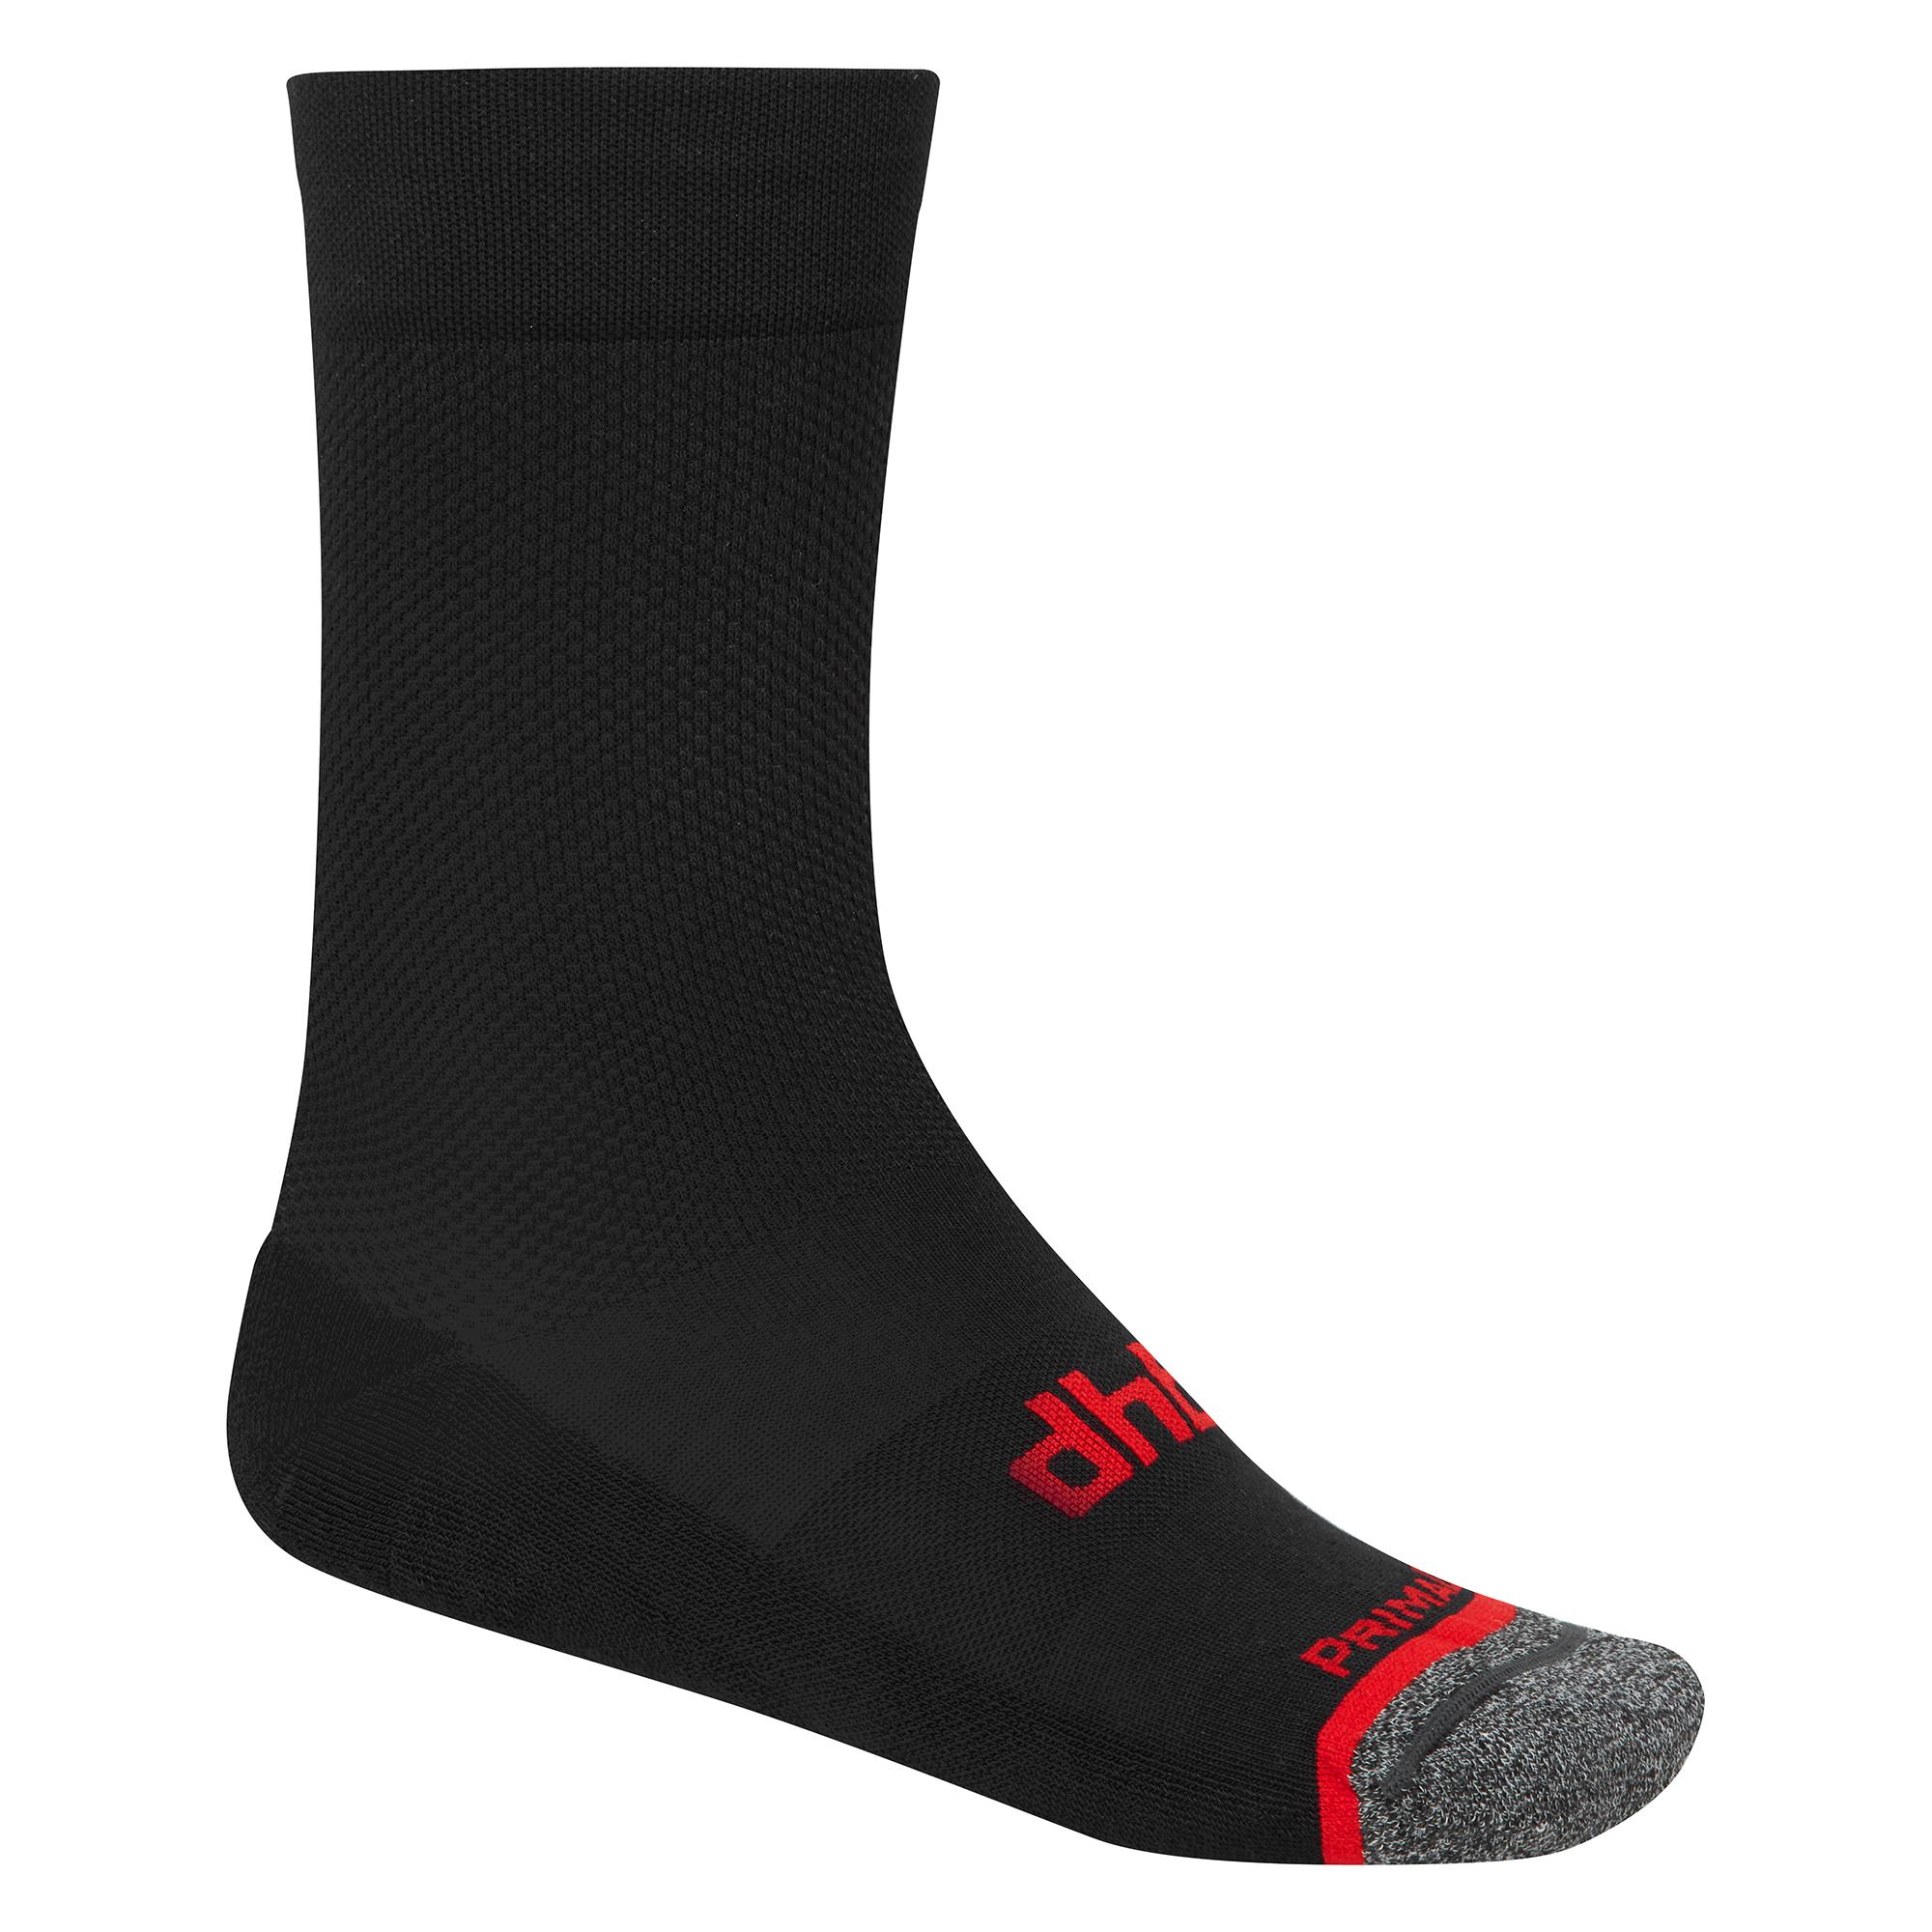 Dhb Aeron Lab Winter Sock - Black/red